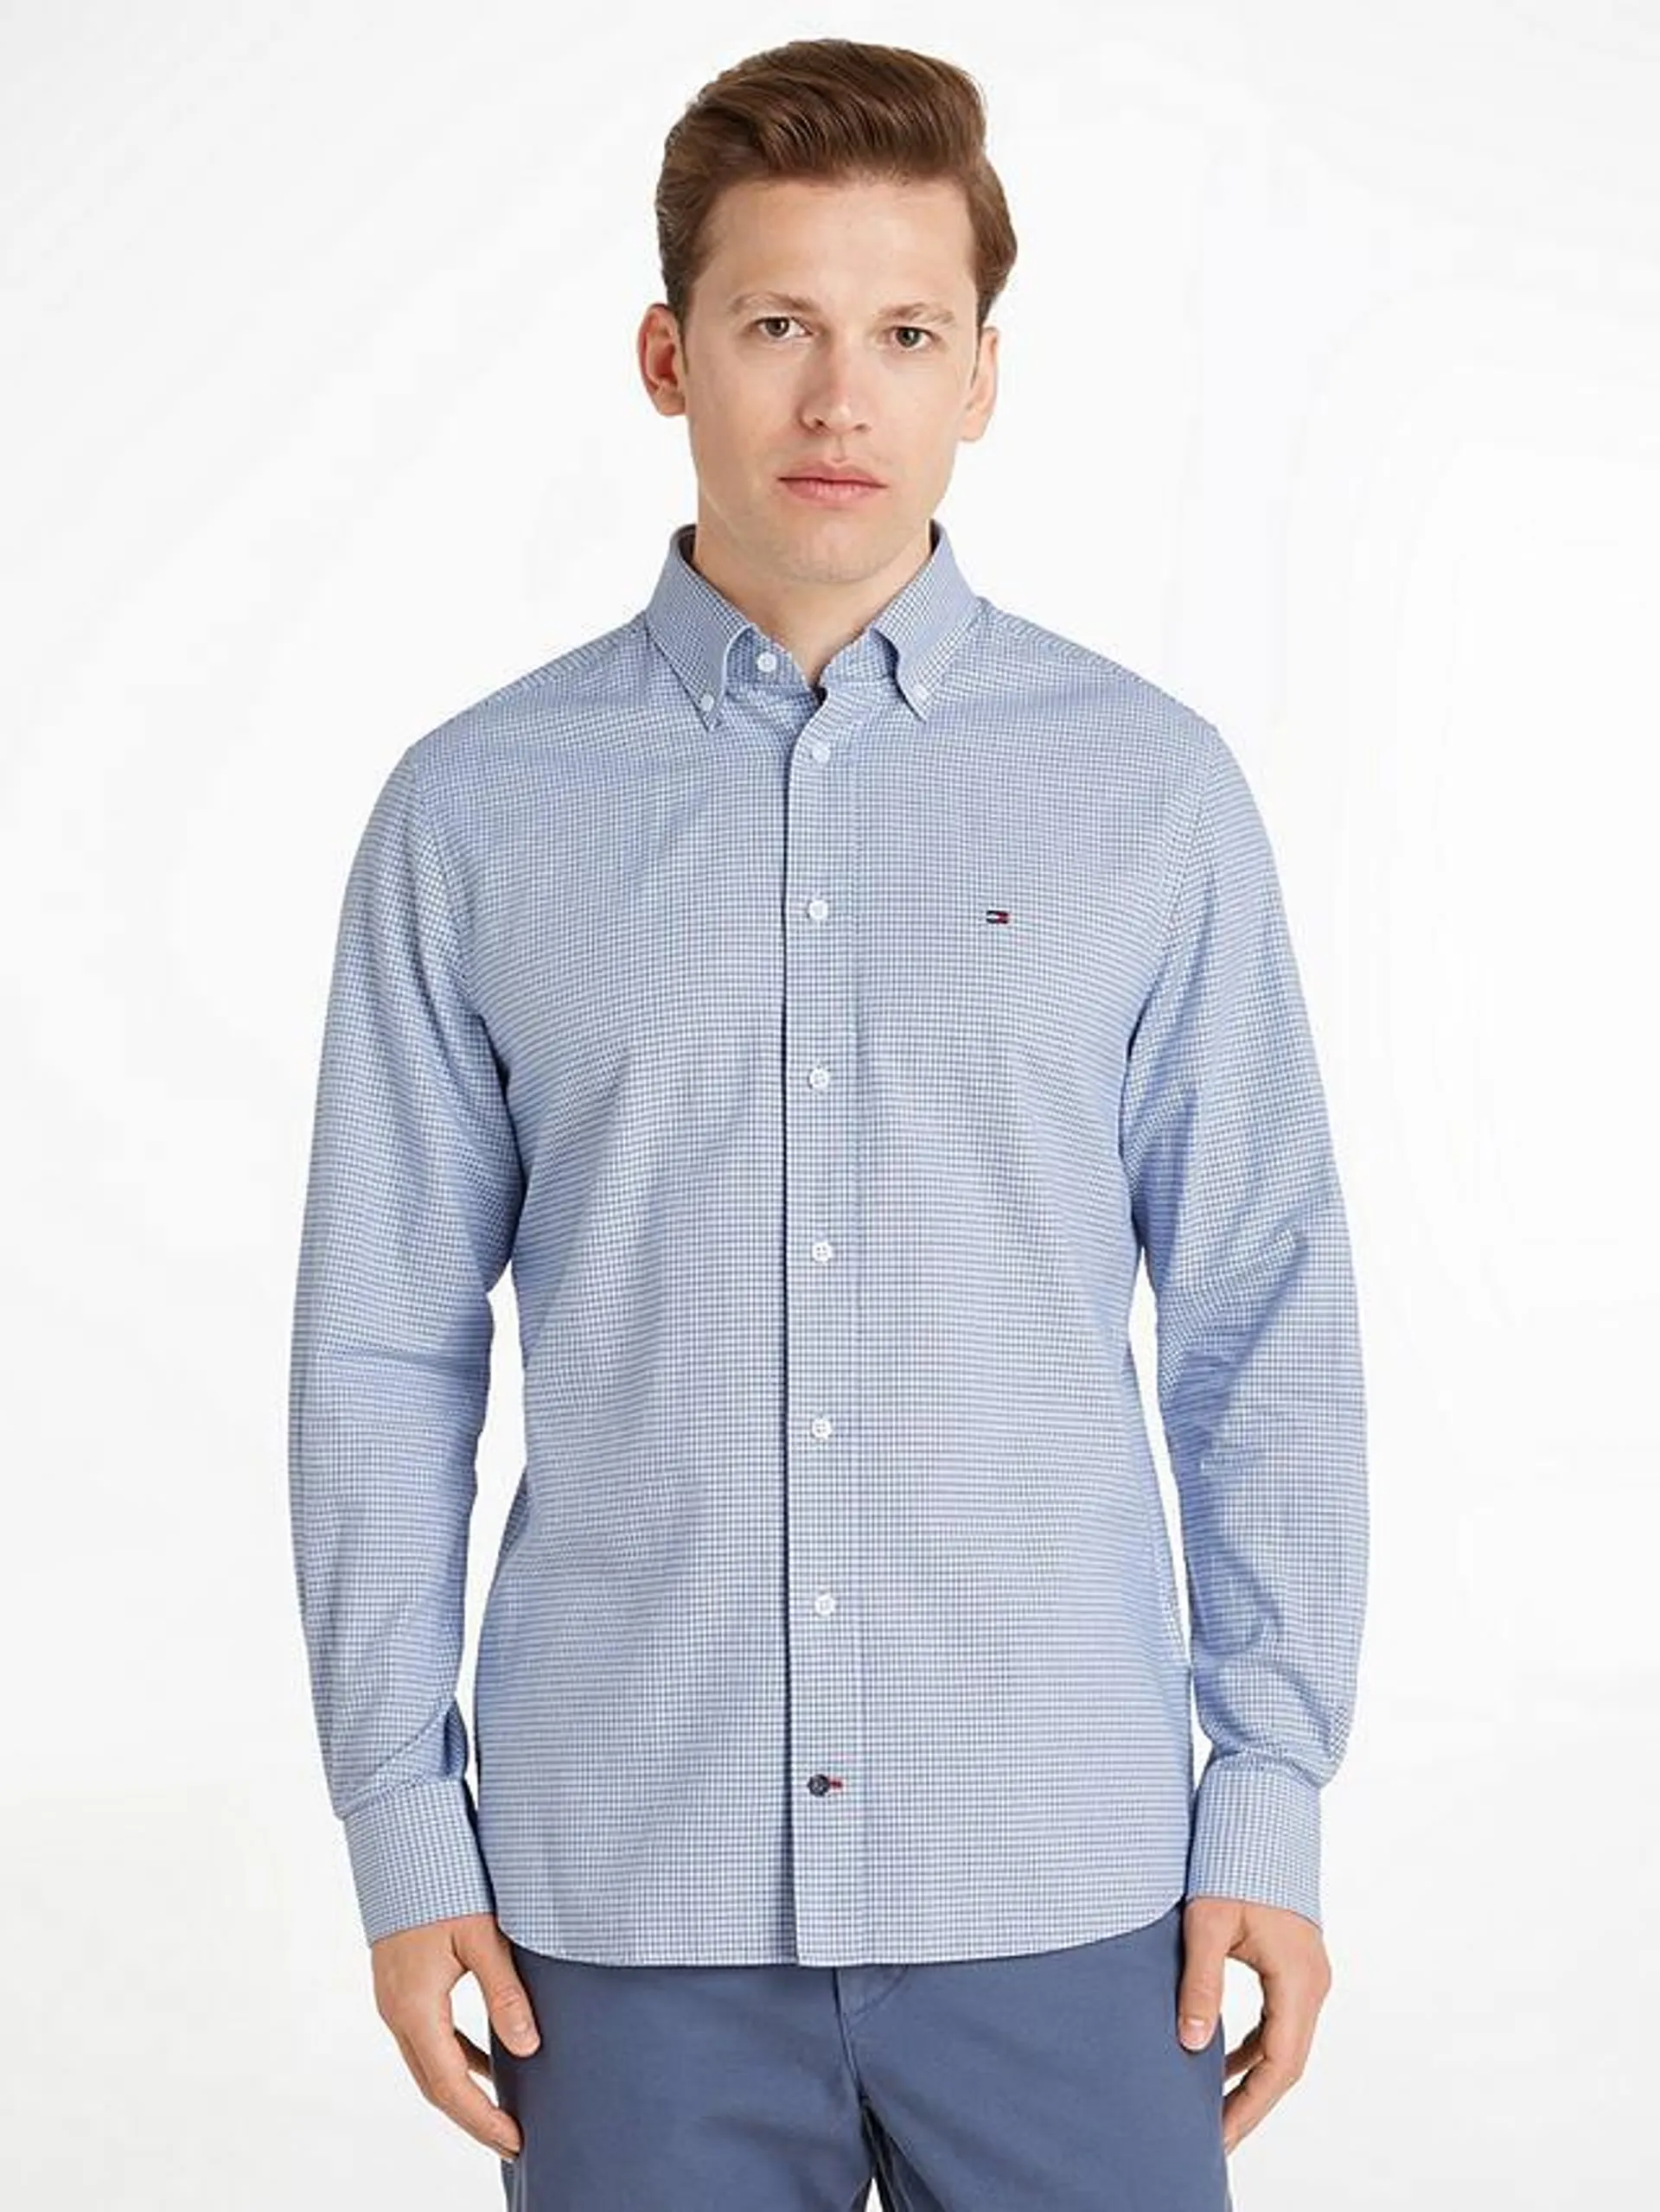 Tommy Hilfiger Cotton Check Shirt, Blue/Navy/White